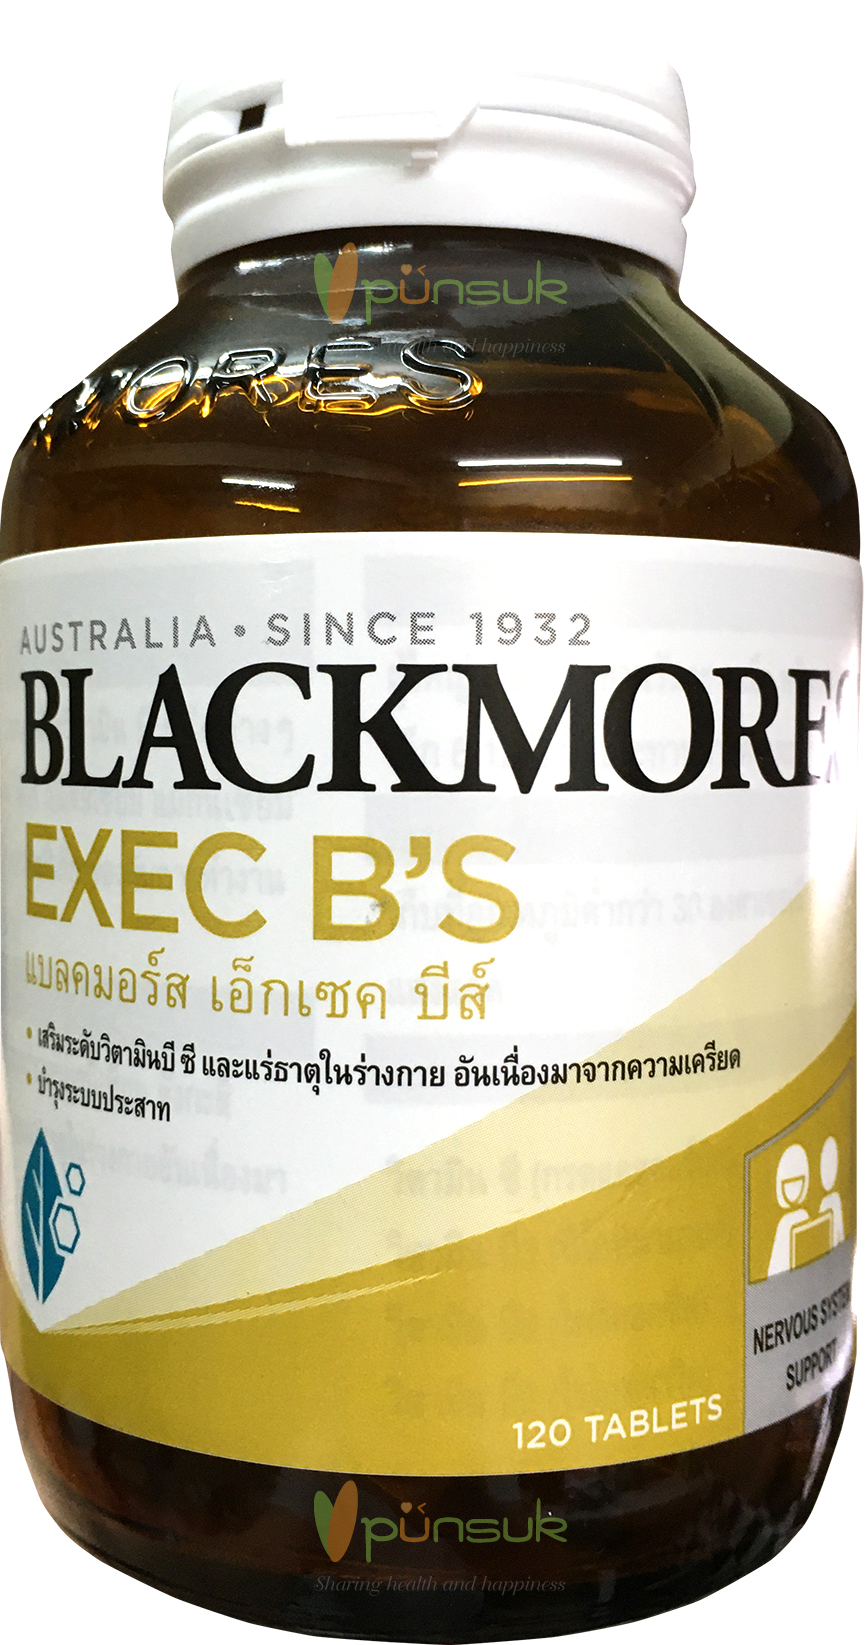 Blackmores Exec B's (120 Tablets) แบลคมอร์ส เอ็กเซค บีส์